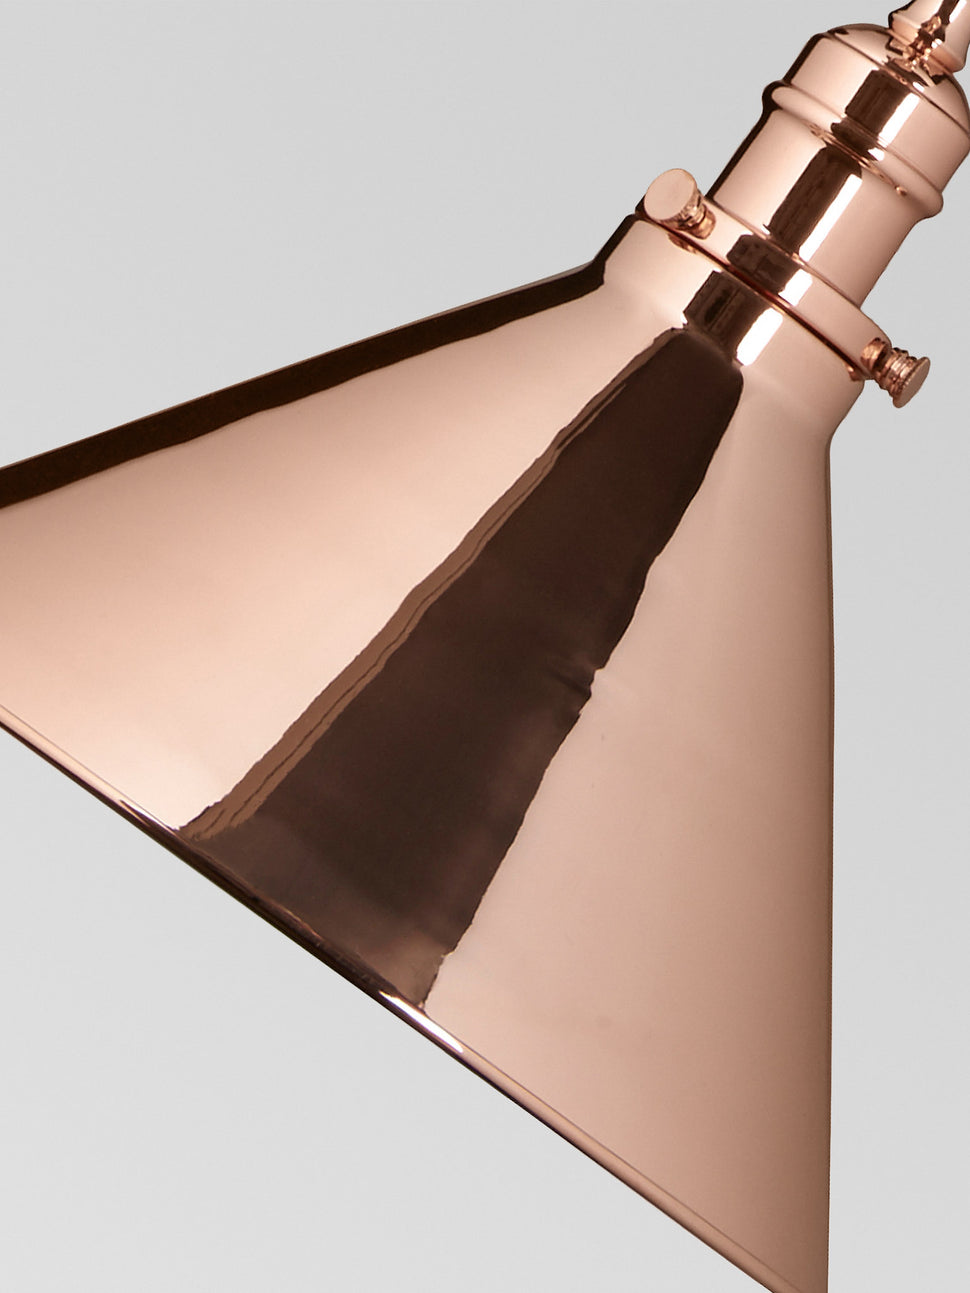 Avignon Polished Copper Wall Light/Pendant